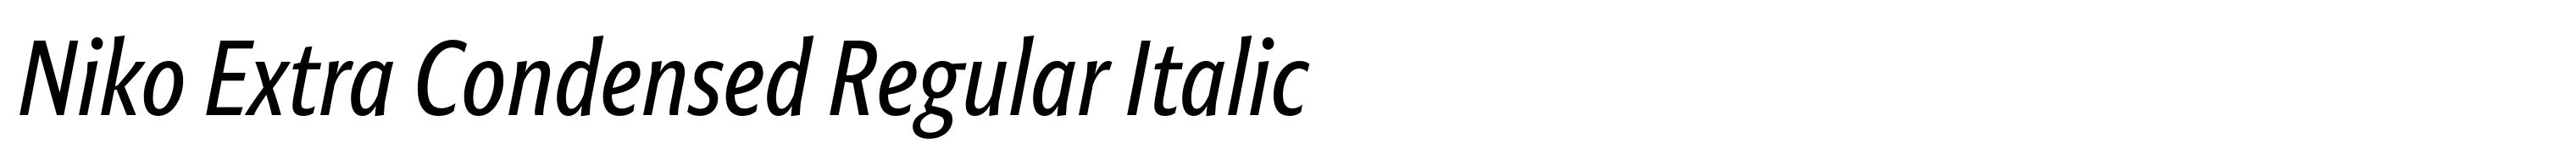 Niko Extra Condensed Regular Italic